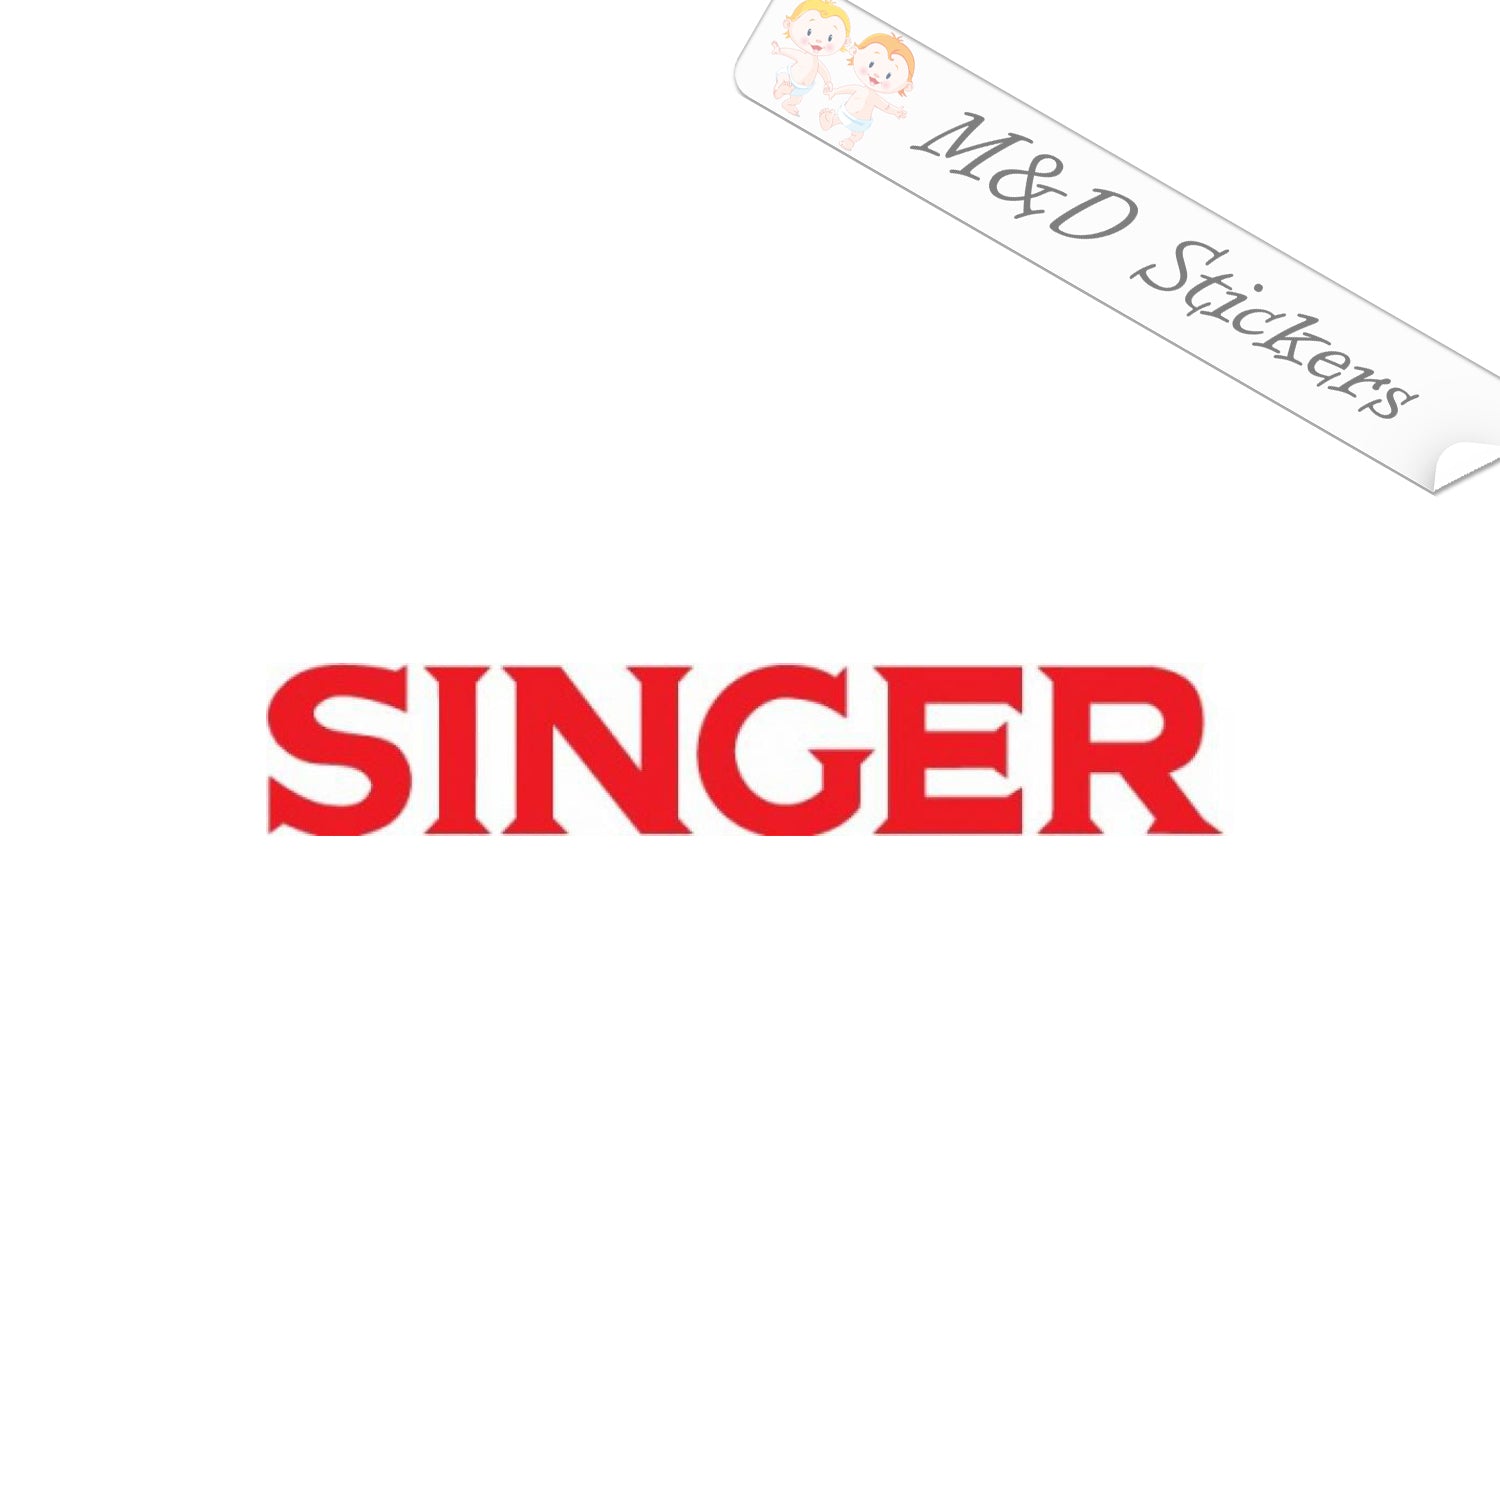 Singer Corporation Logo, symbol, meaning, history, PNG, brand